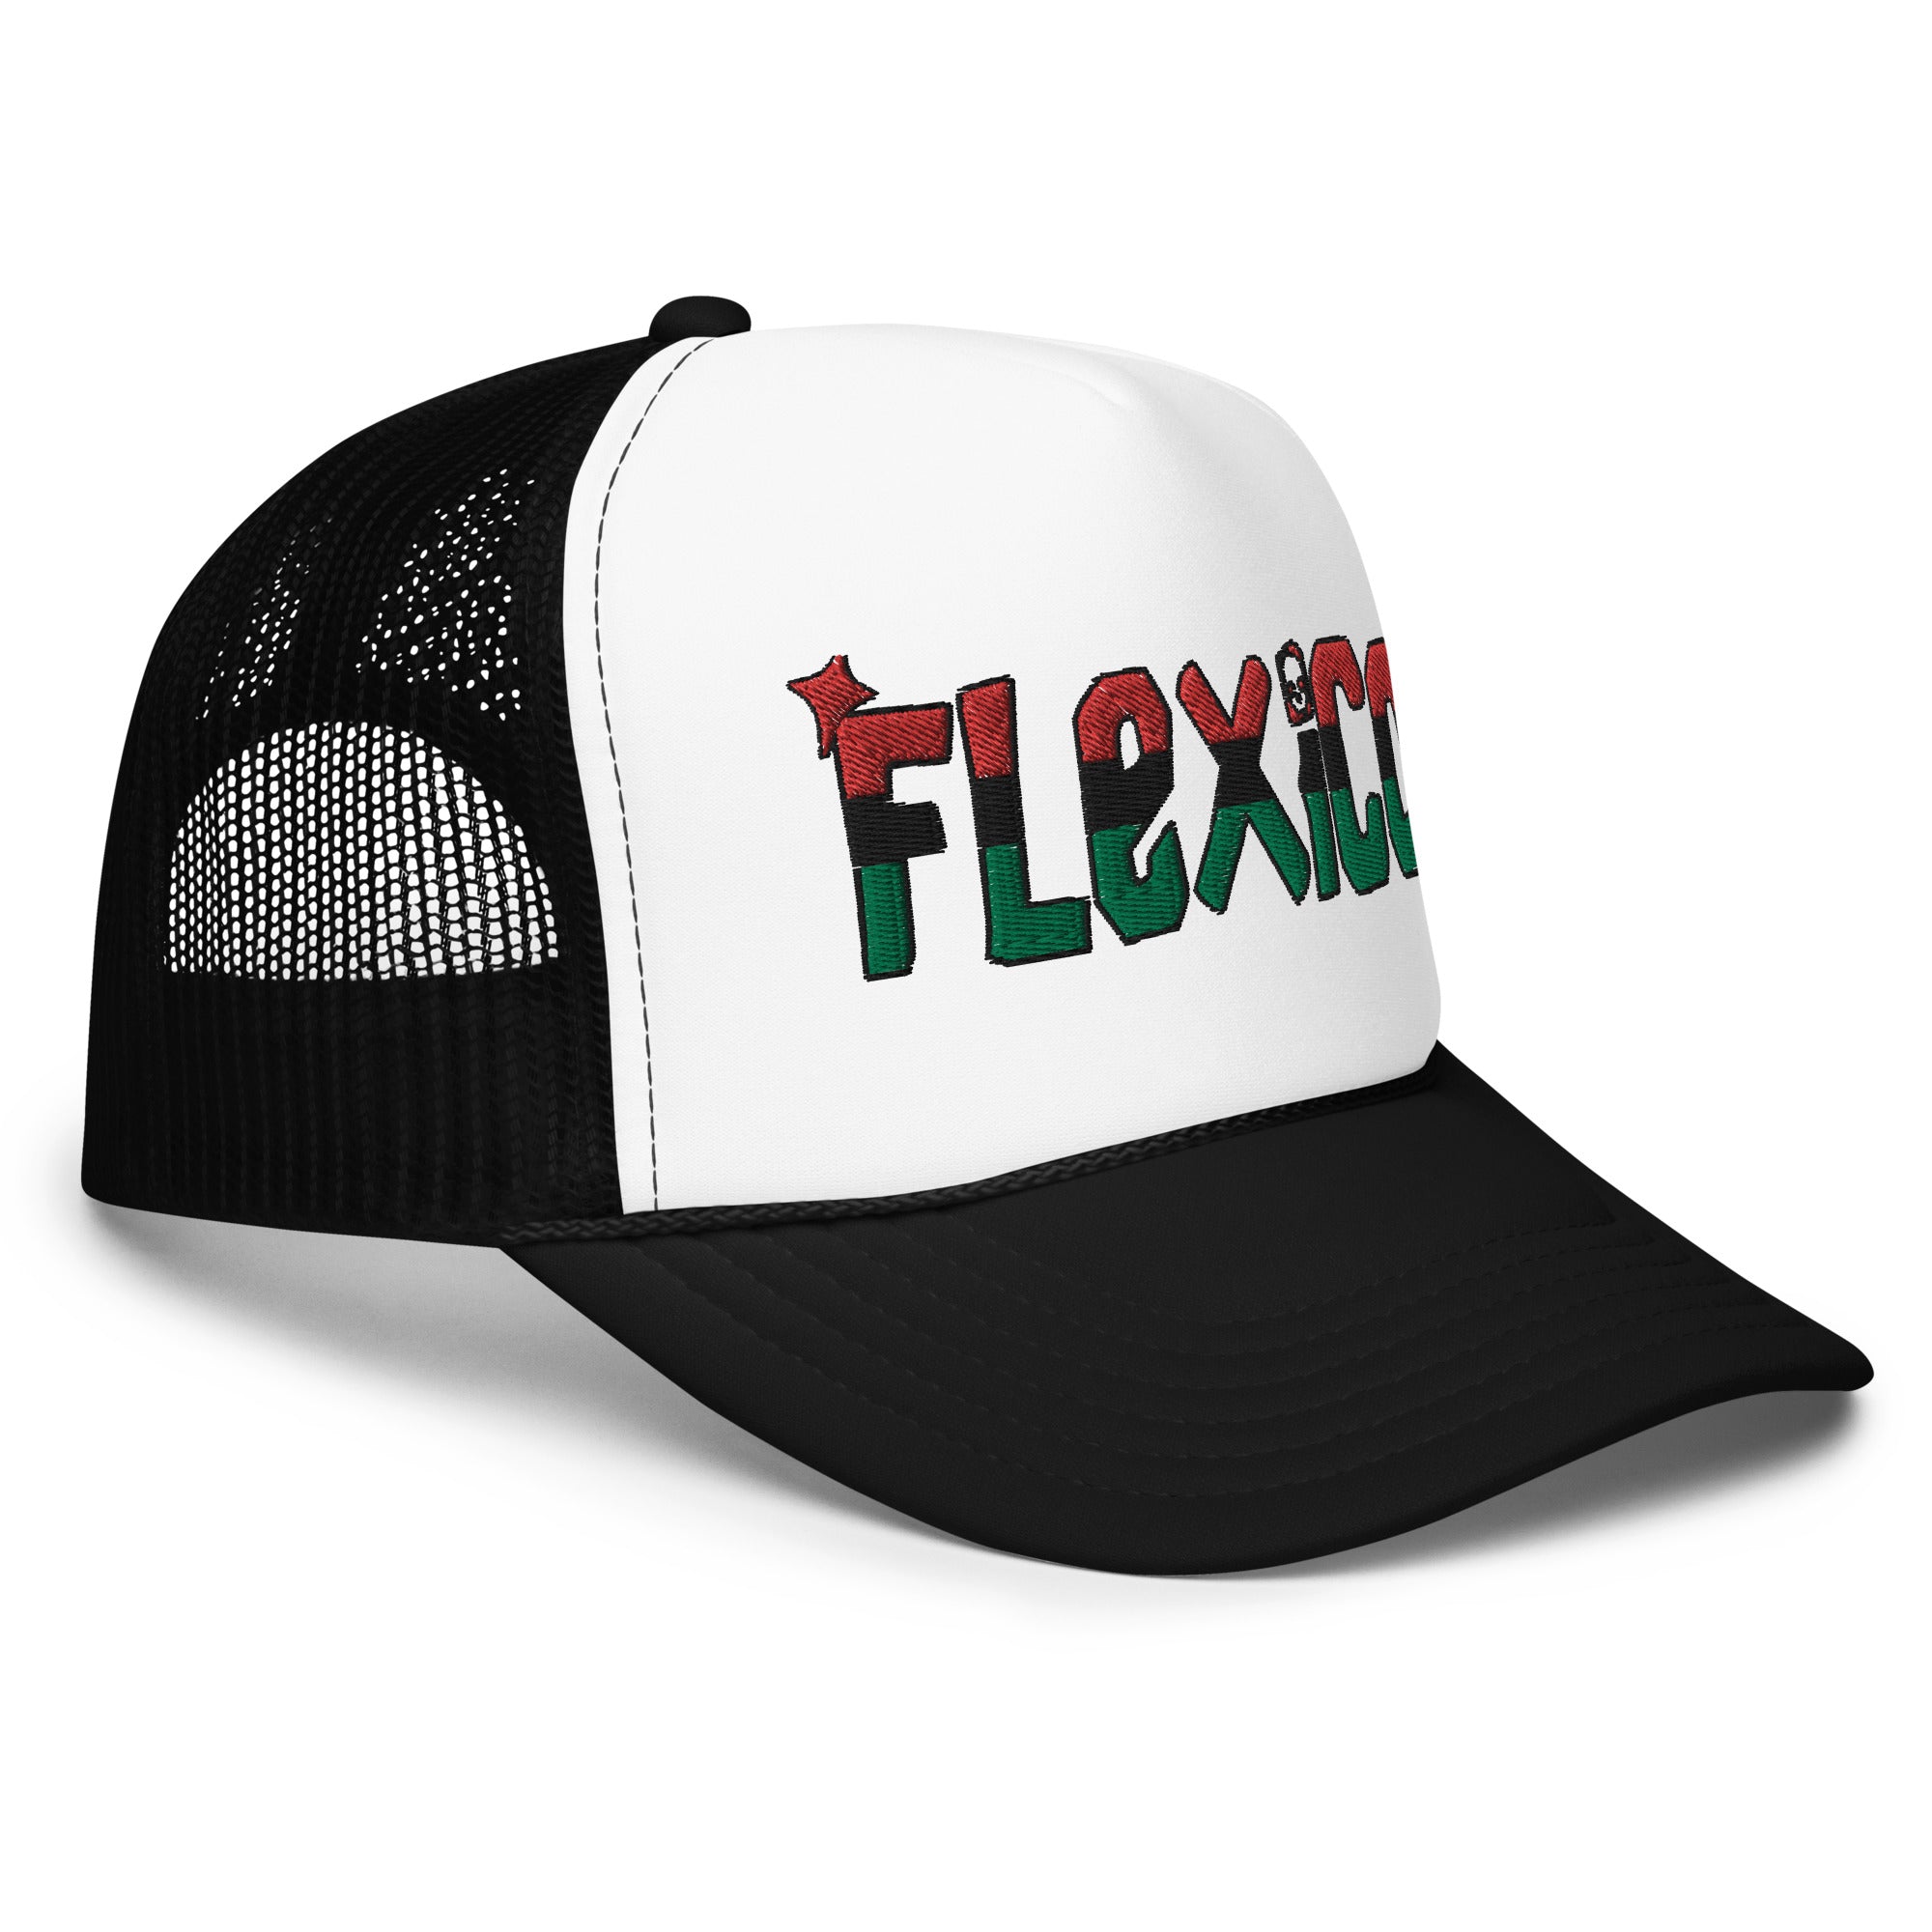 Flexico RED BLACK GREEN  LOGO HAT